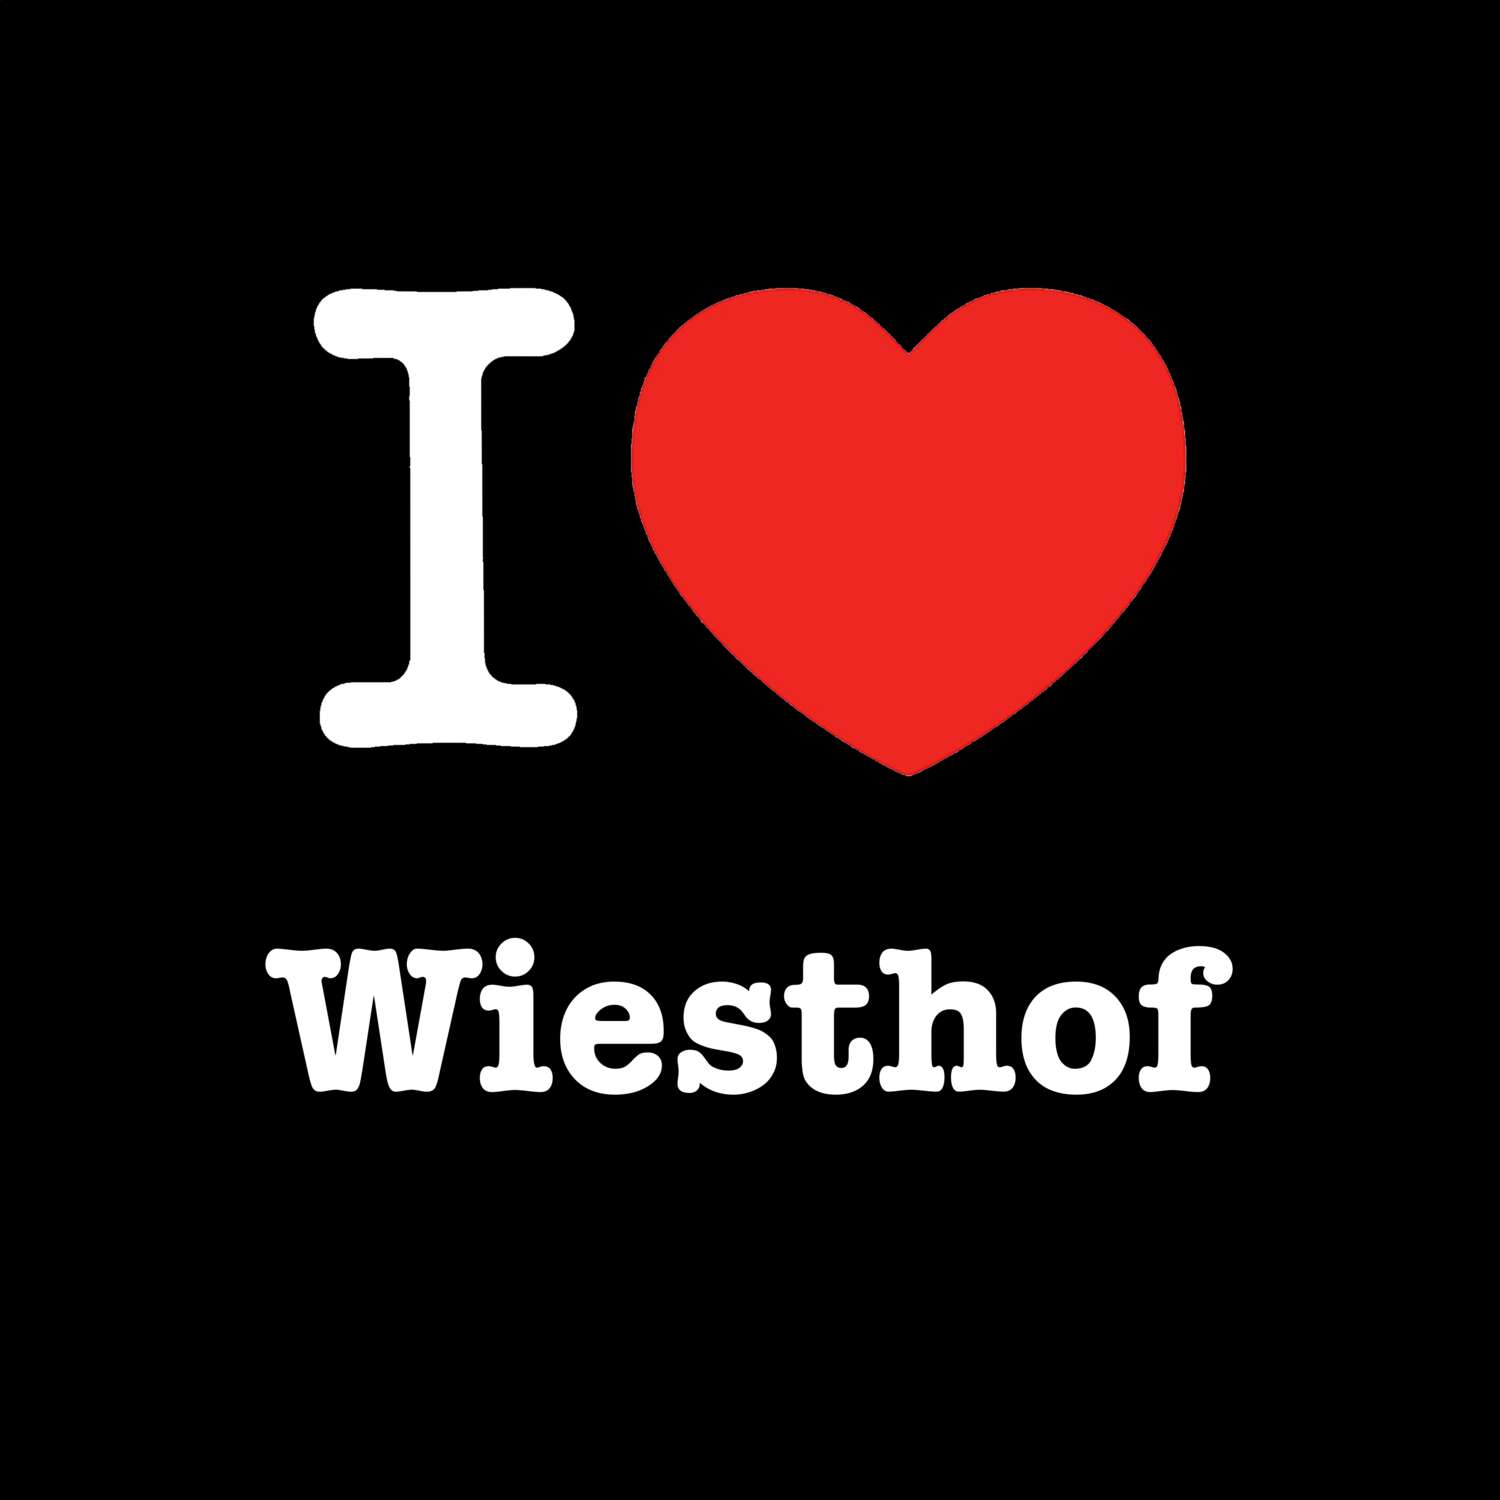 Wiesthof T-Shirt »I love«